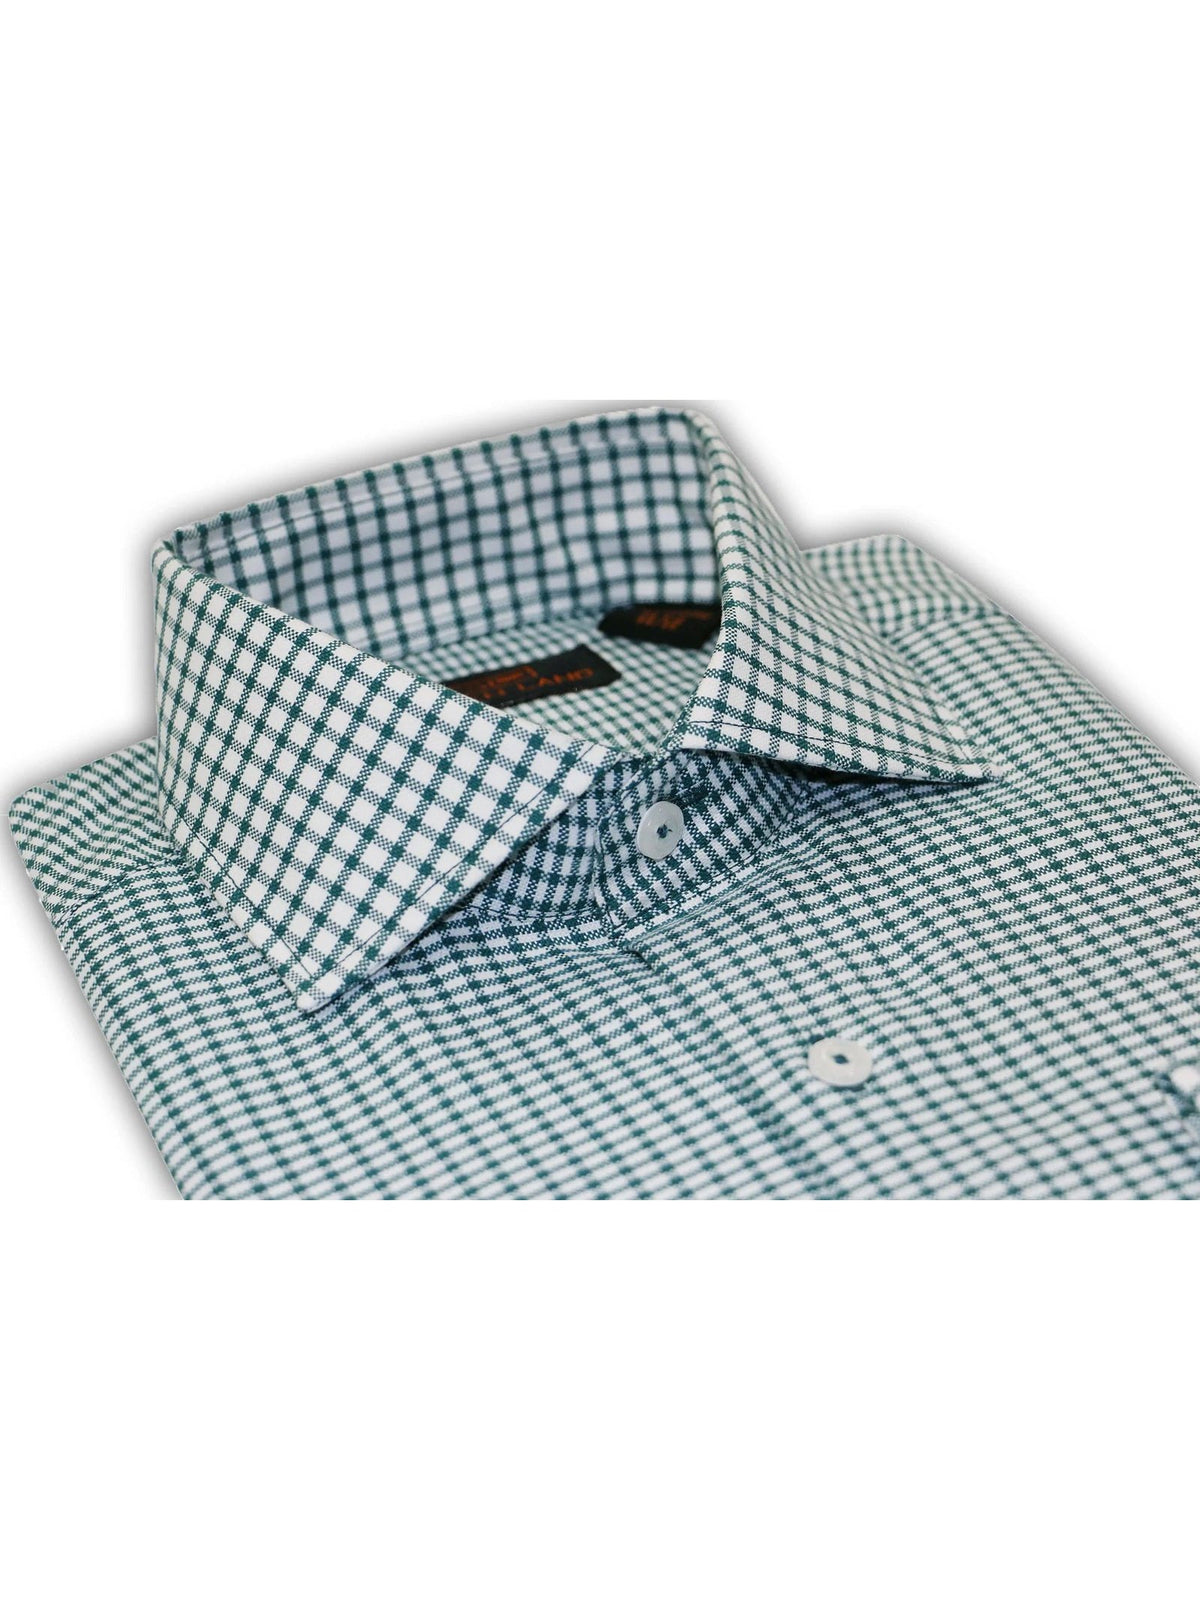 Steven Land SHIRTS Steven Land Mens Green Check 100% Cotton Spread Collar French Cuff Dress Shirt